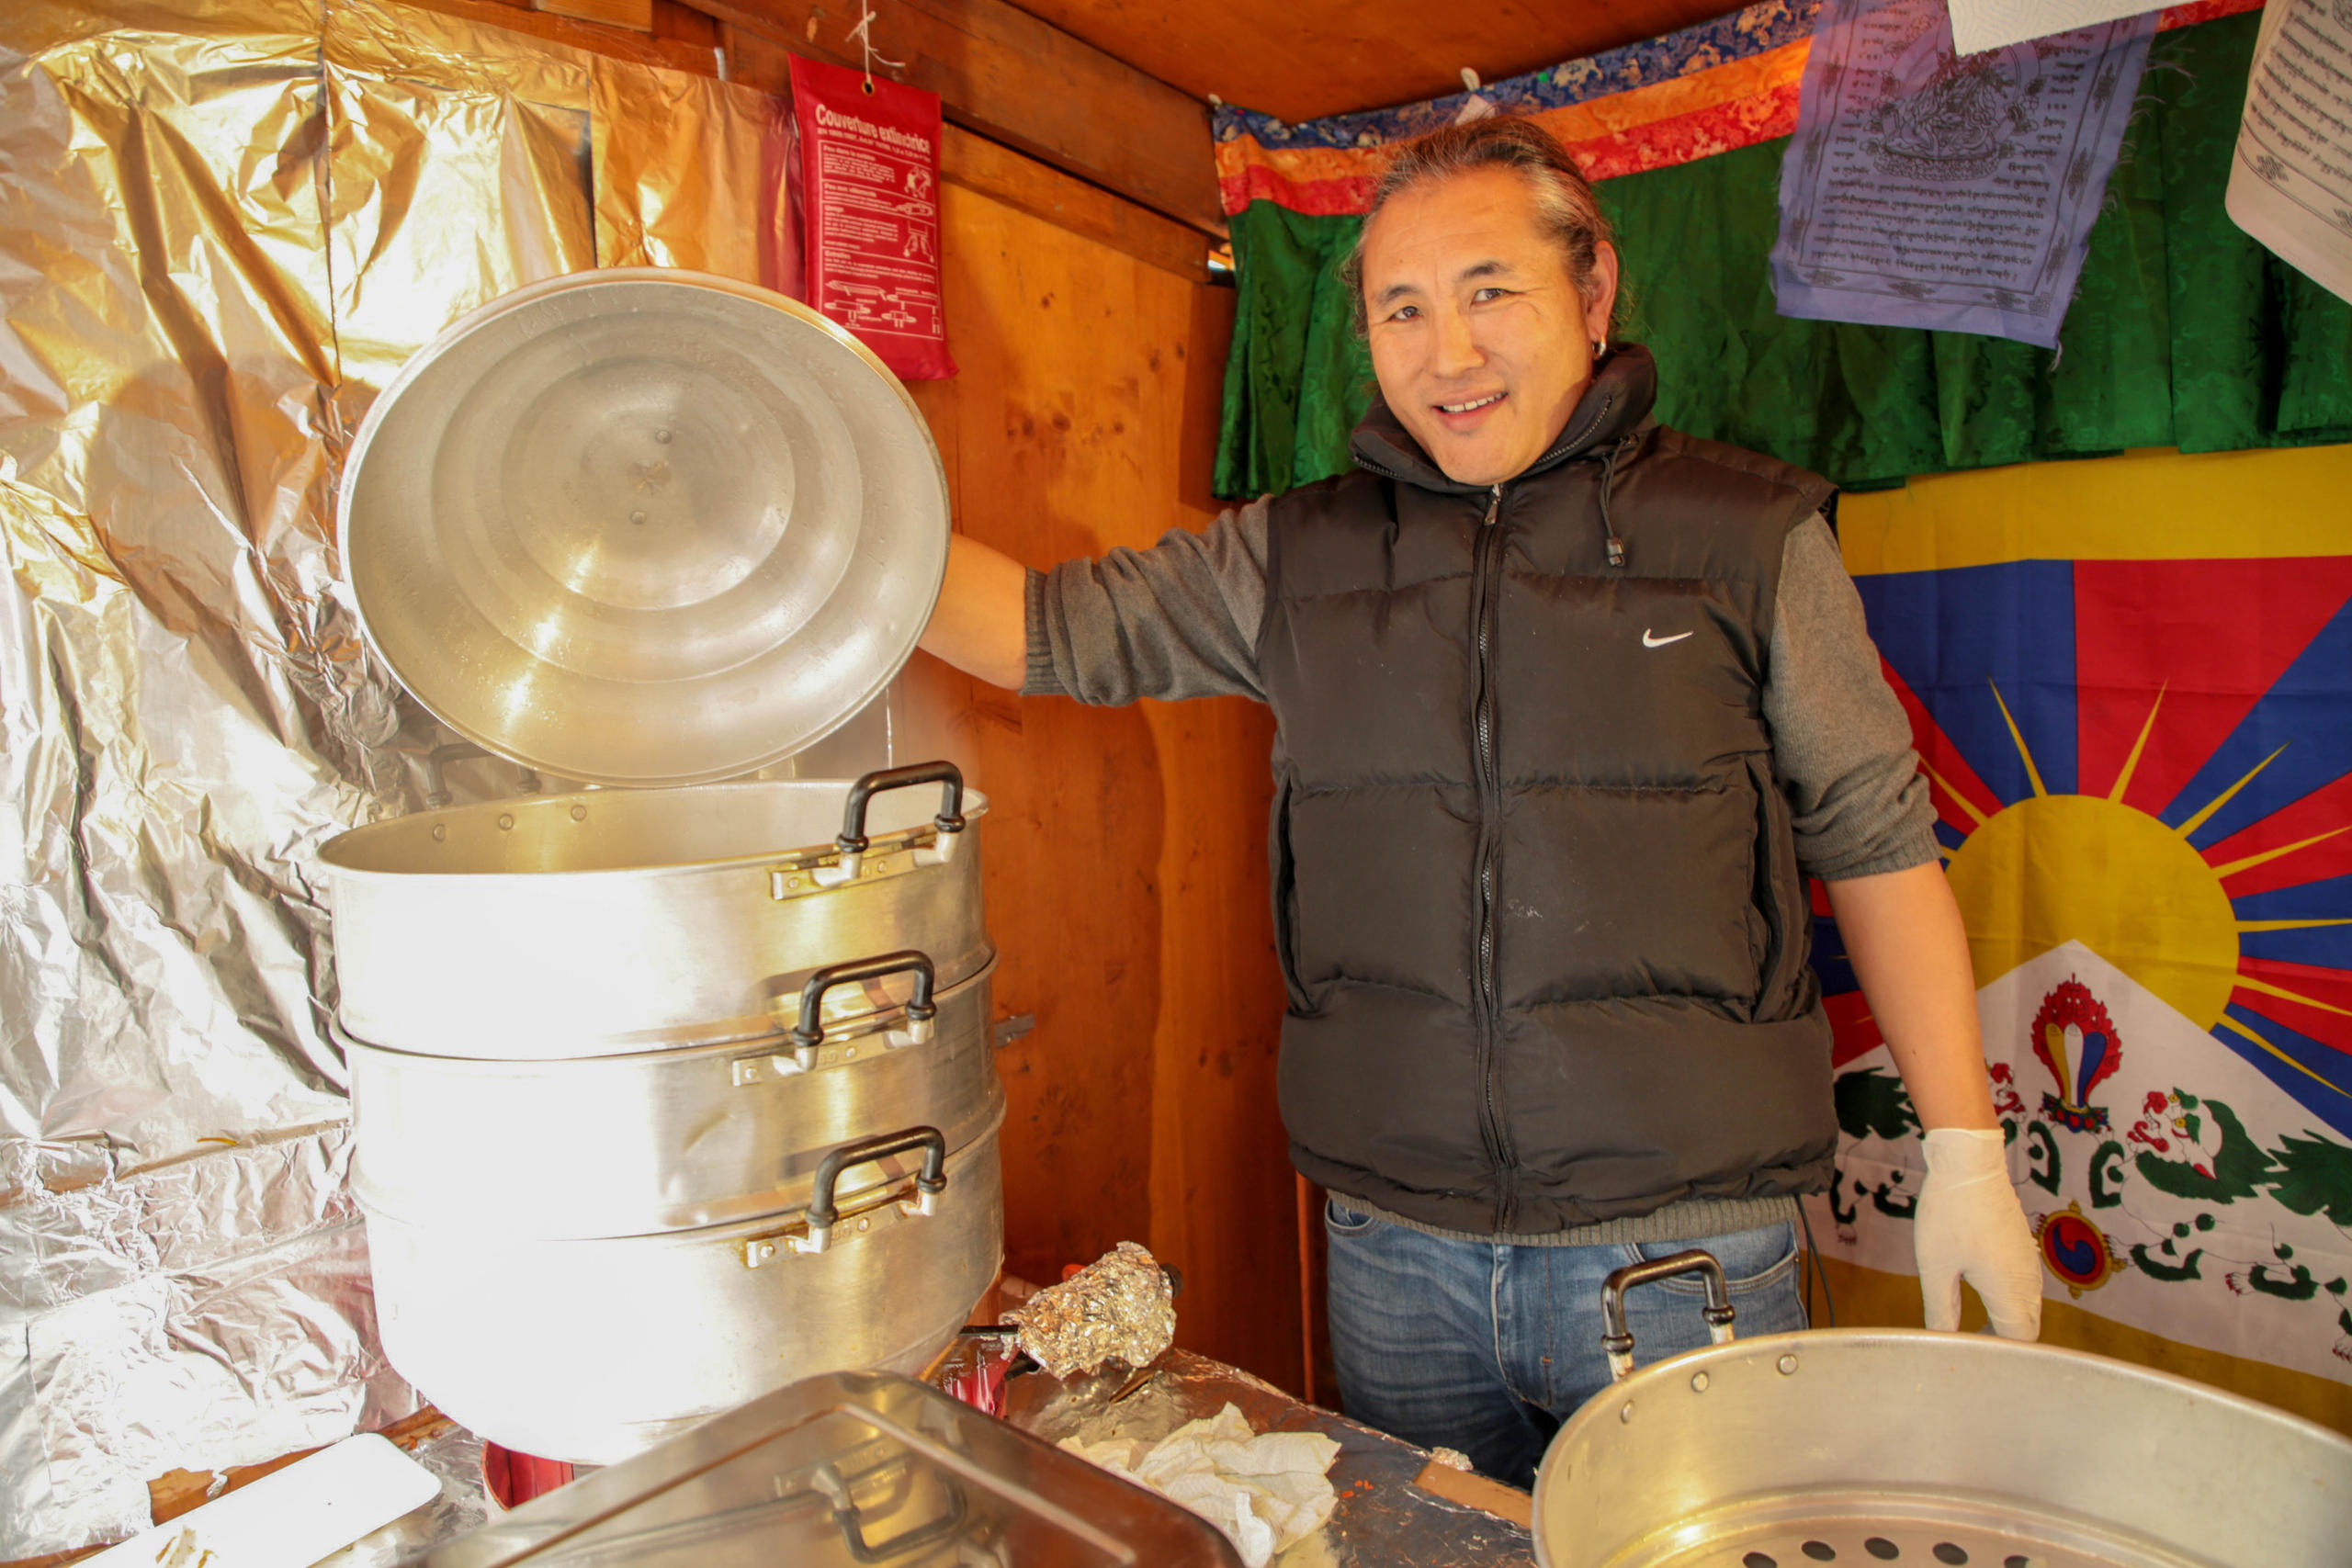 Tibetan man shows what s in his pot